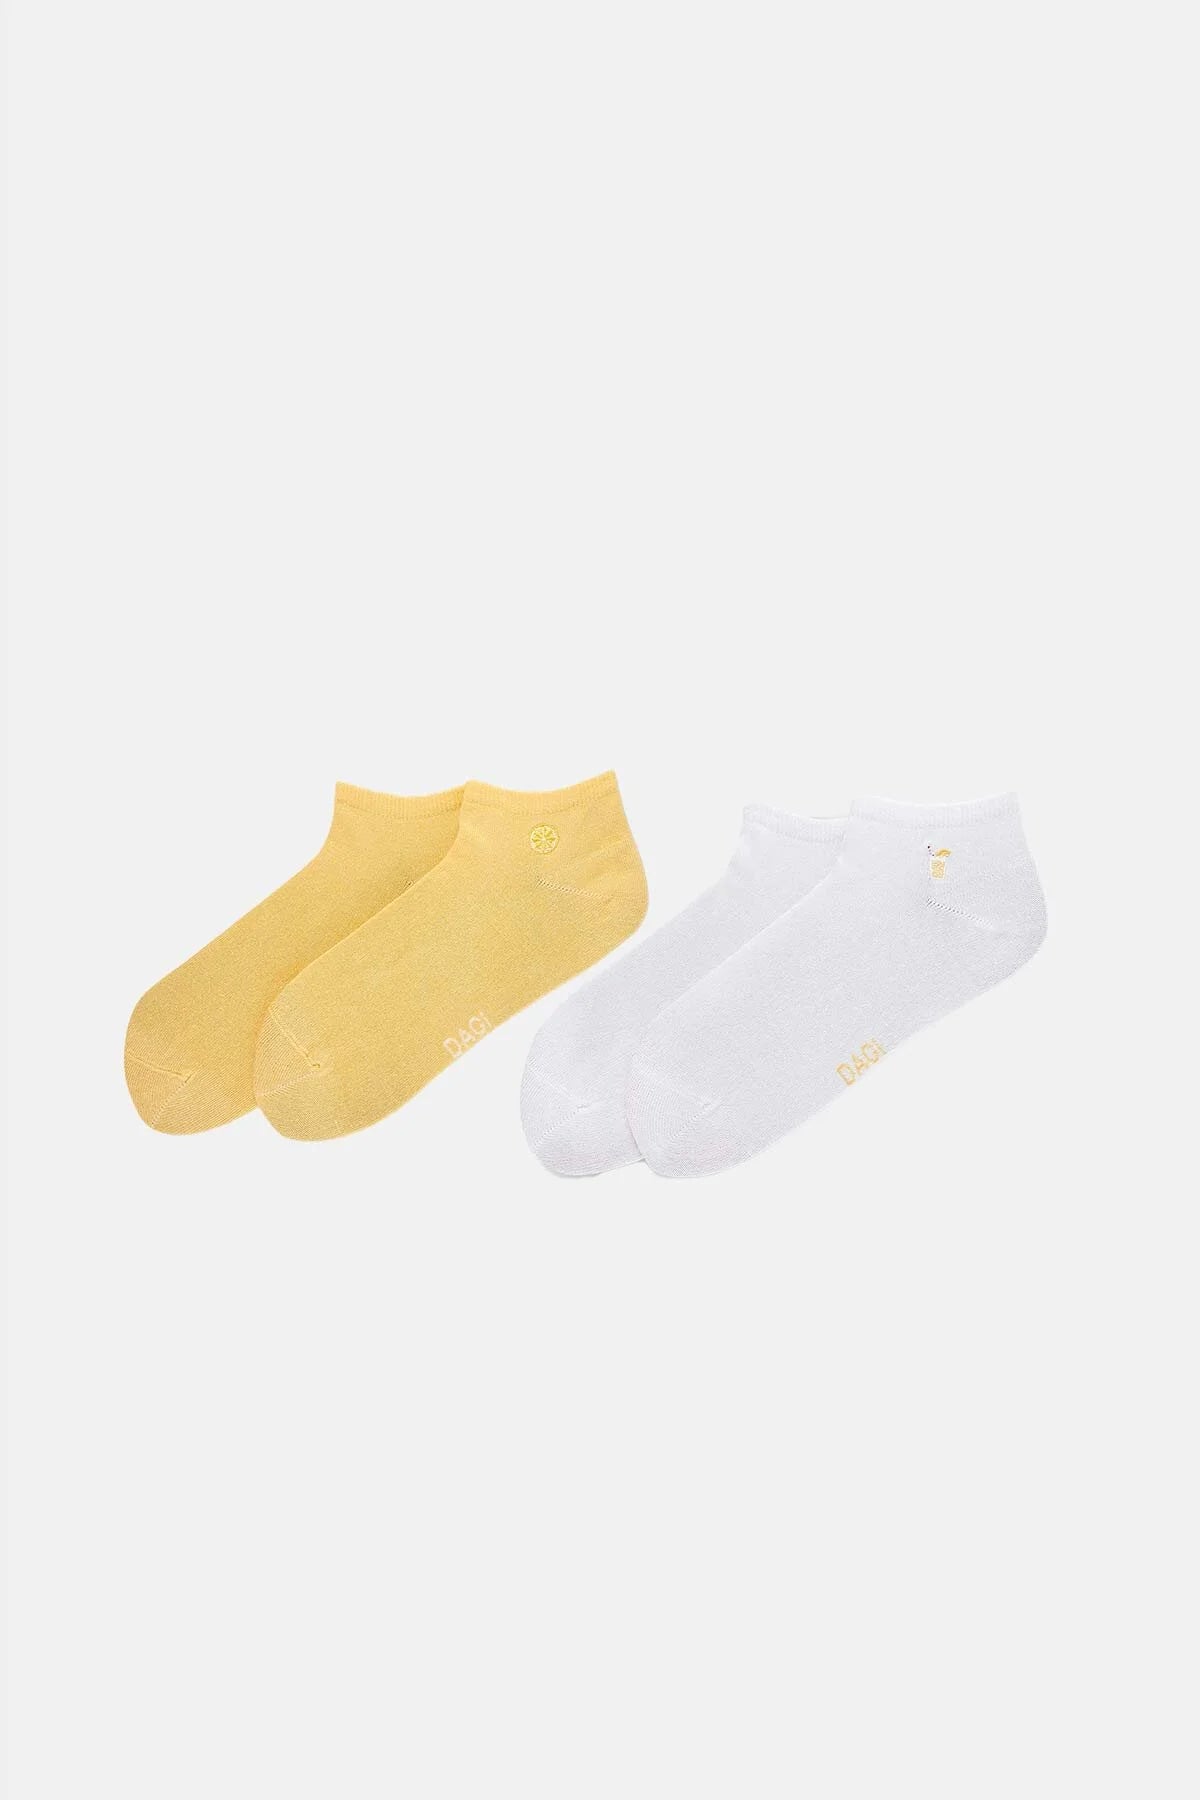 Women's Lemon Embroidered Booties Socks 2-Pieces